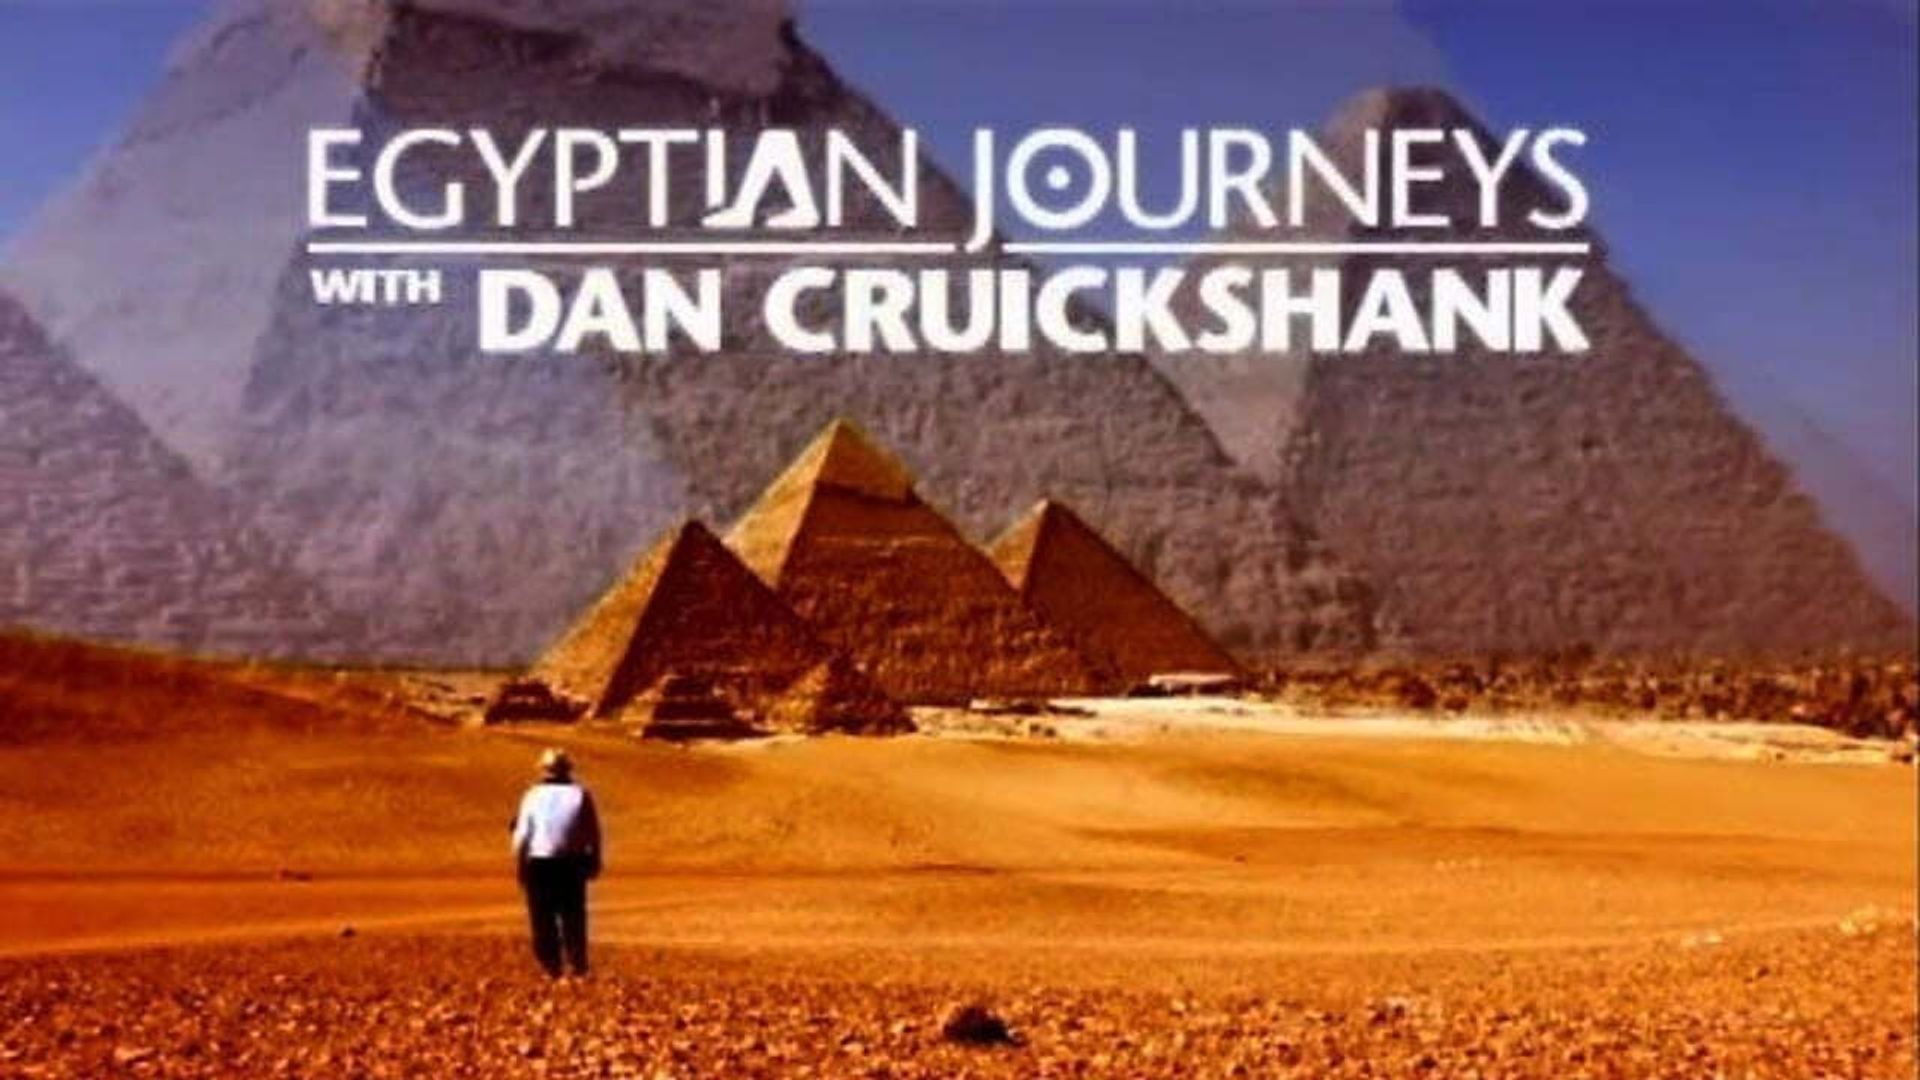 Egyptian Journeys with Dan Cruickshank background